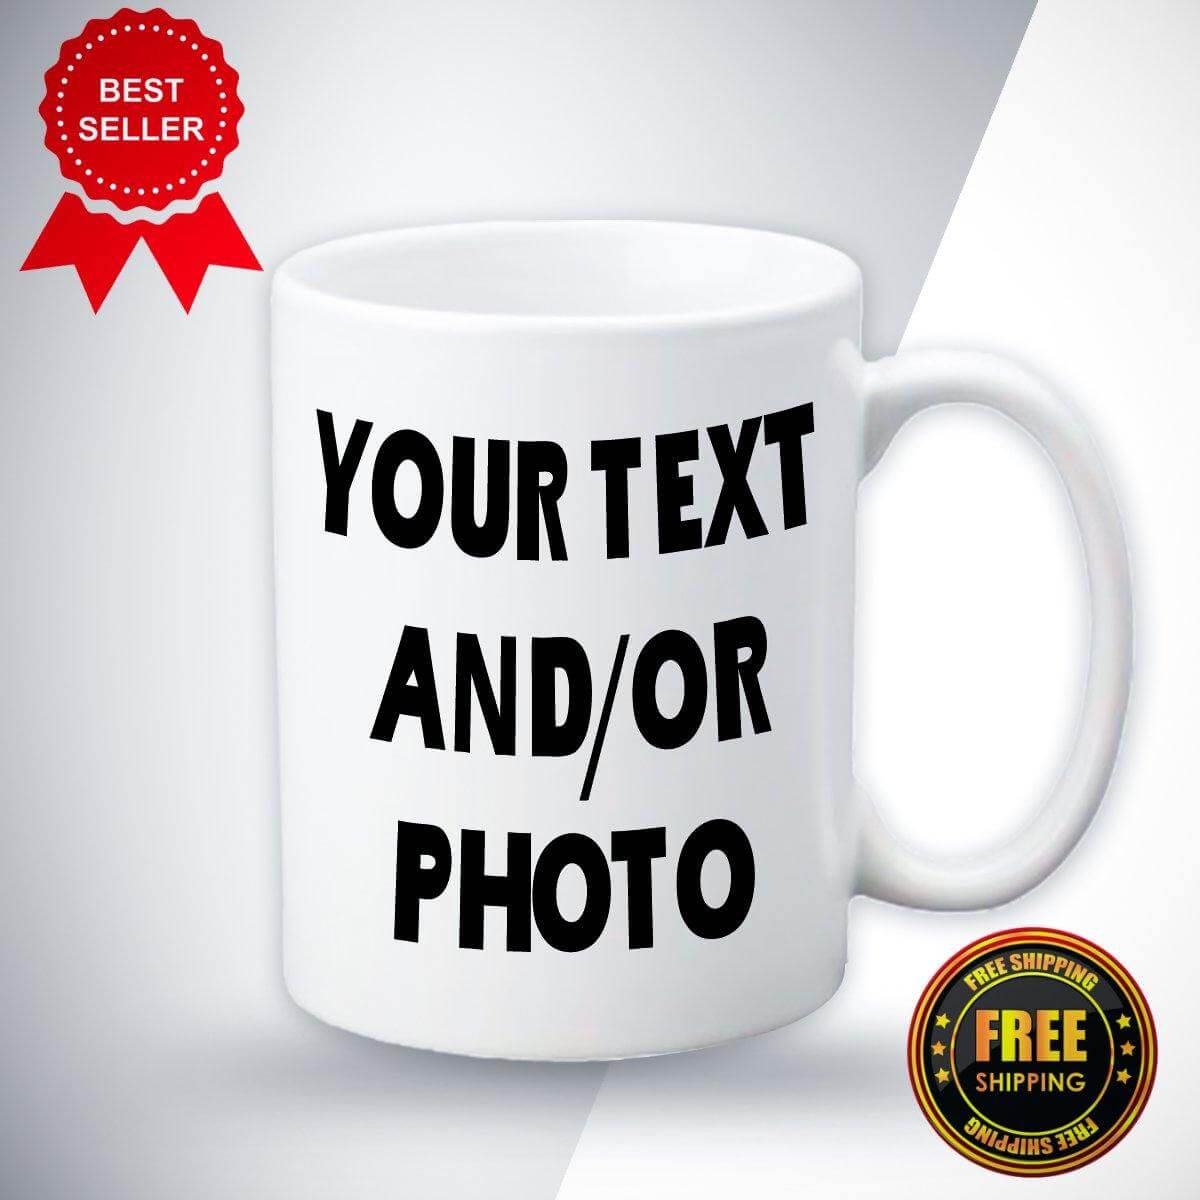 Custom Text / Photo Printed Mug.